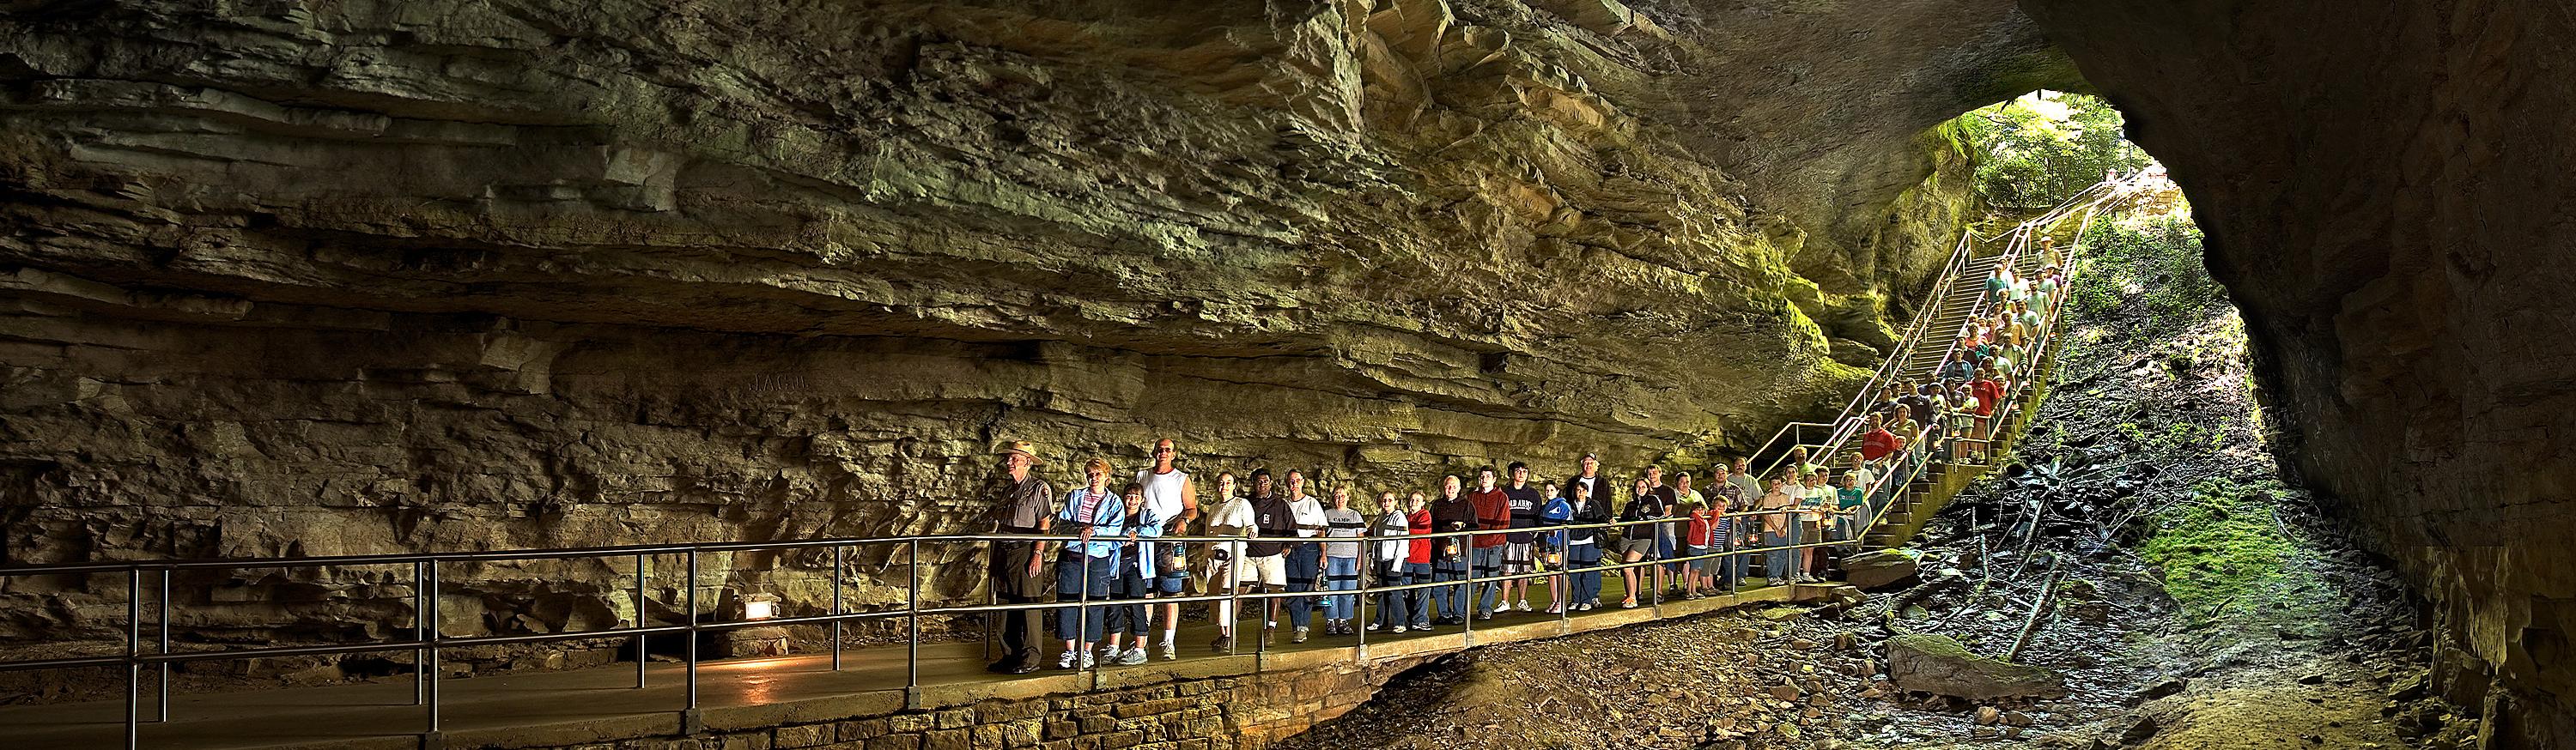 Mammoth Cave National Park (U.S. National Park Service)